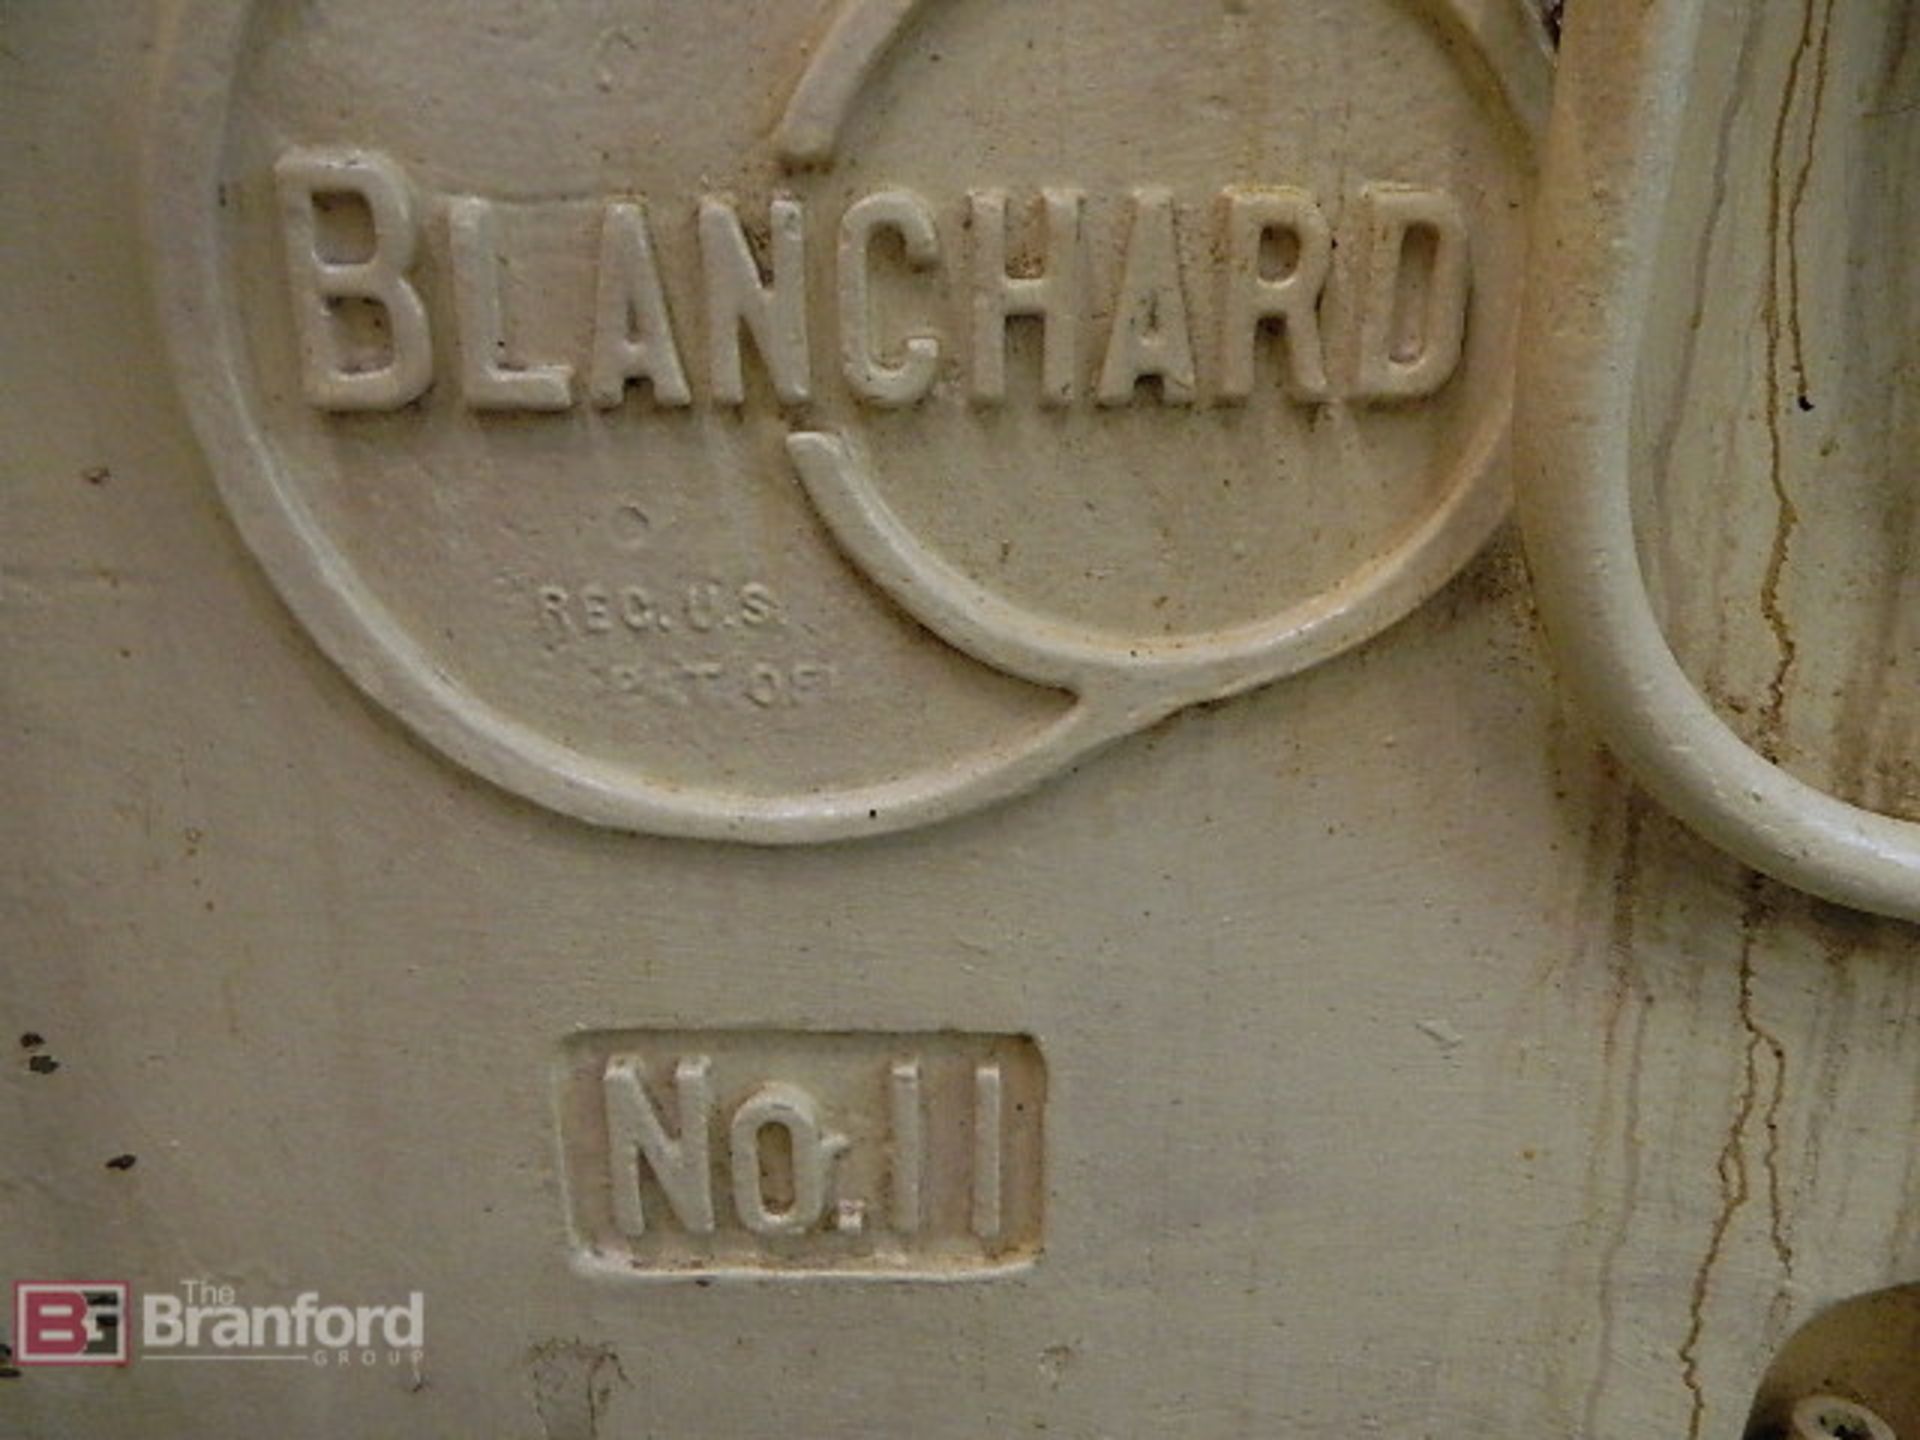 Blanchard No. II Rotary Surface Grinder - Image 2 of 6